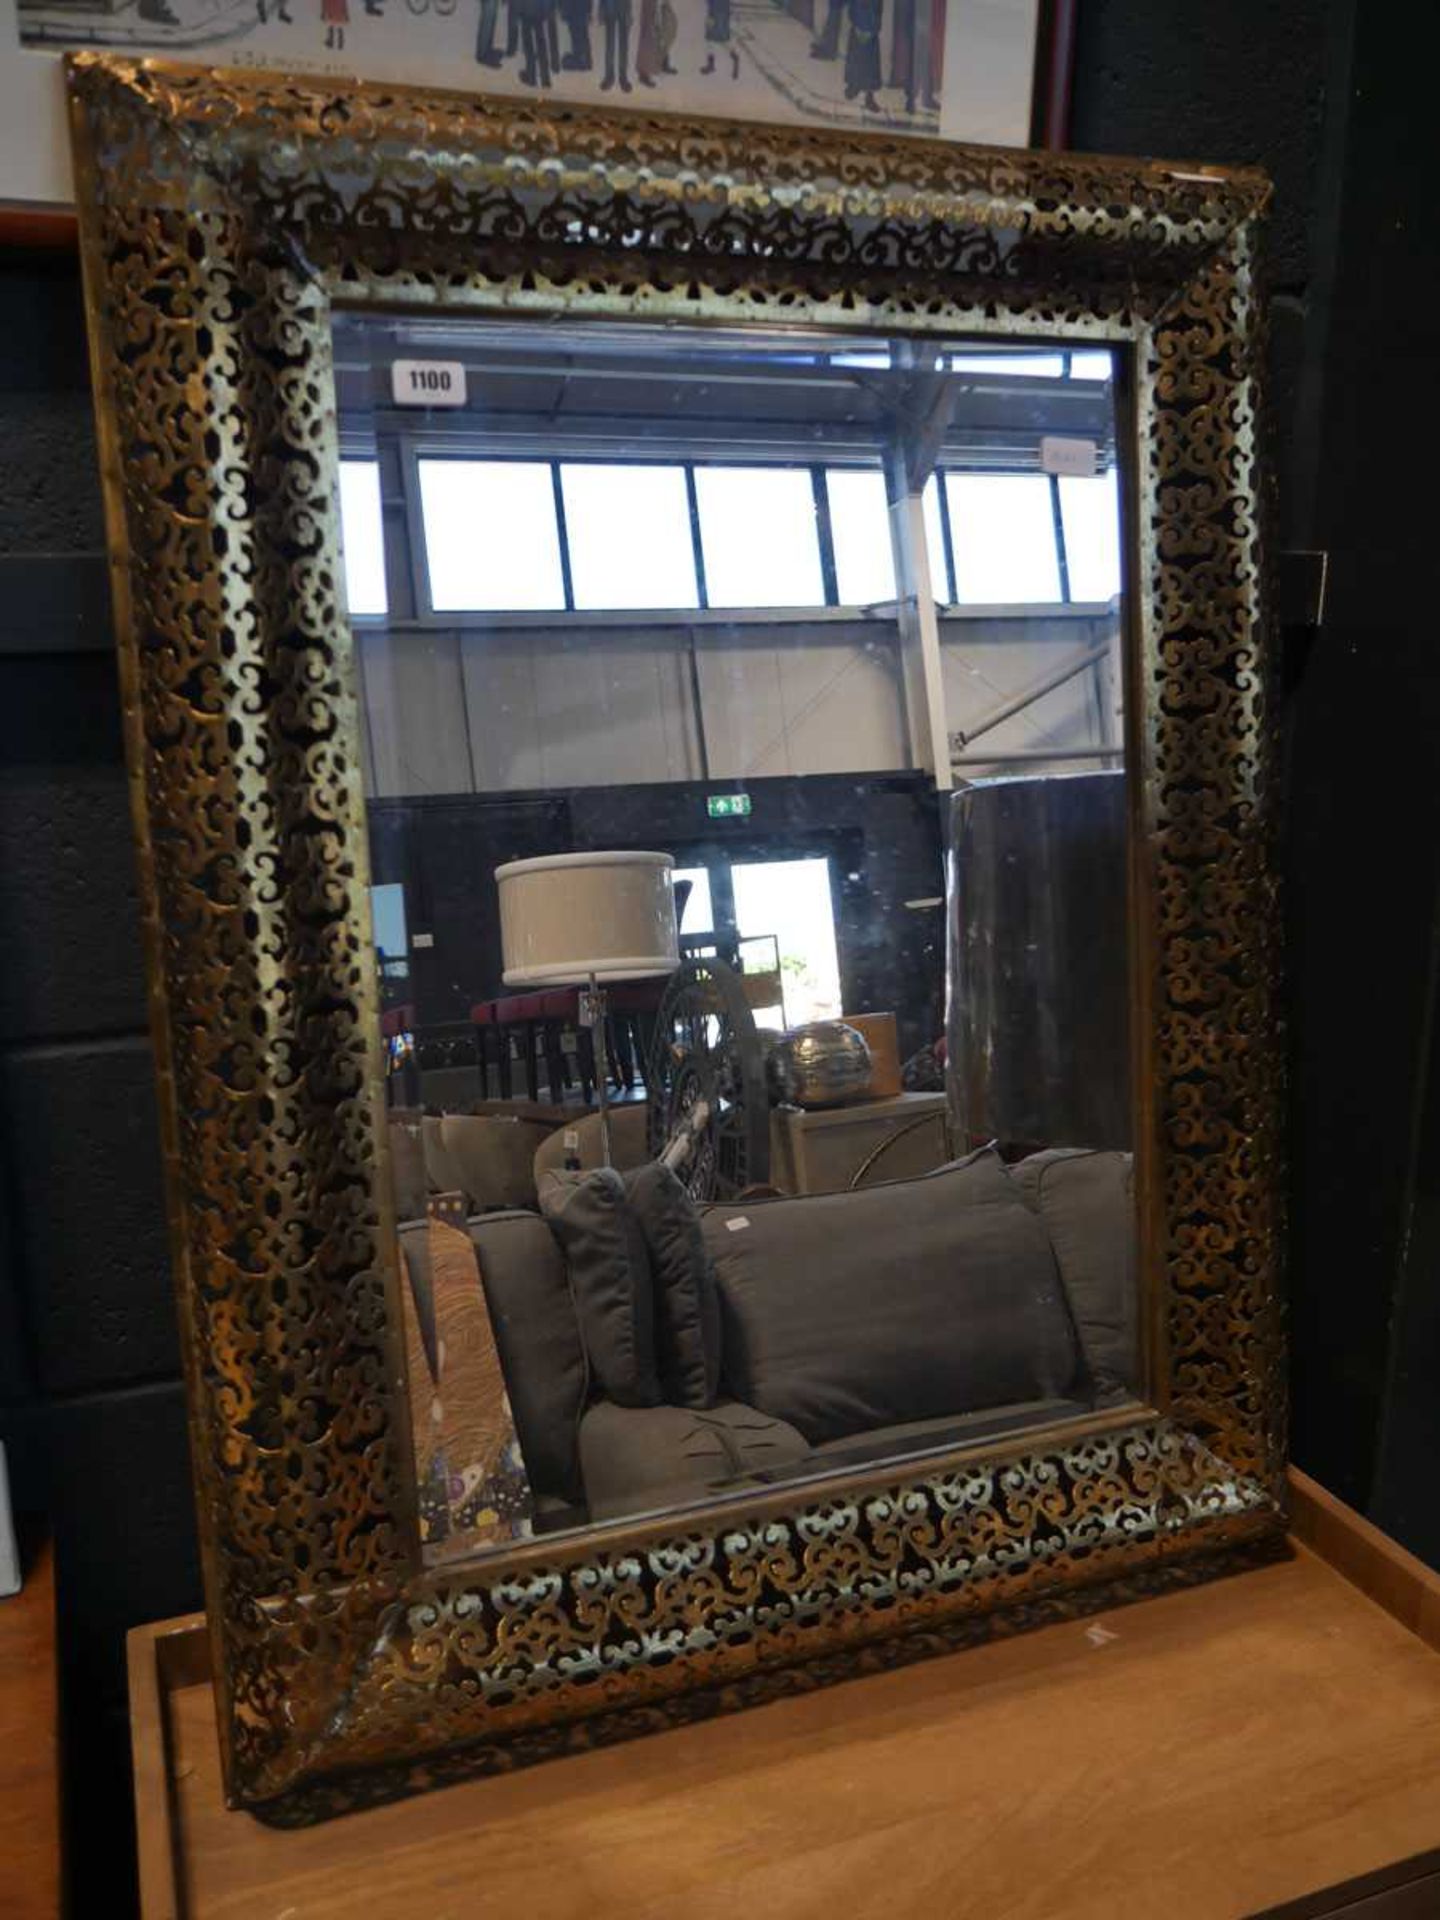 Rectangular beveled wall mirror in a brass fretwork frame